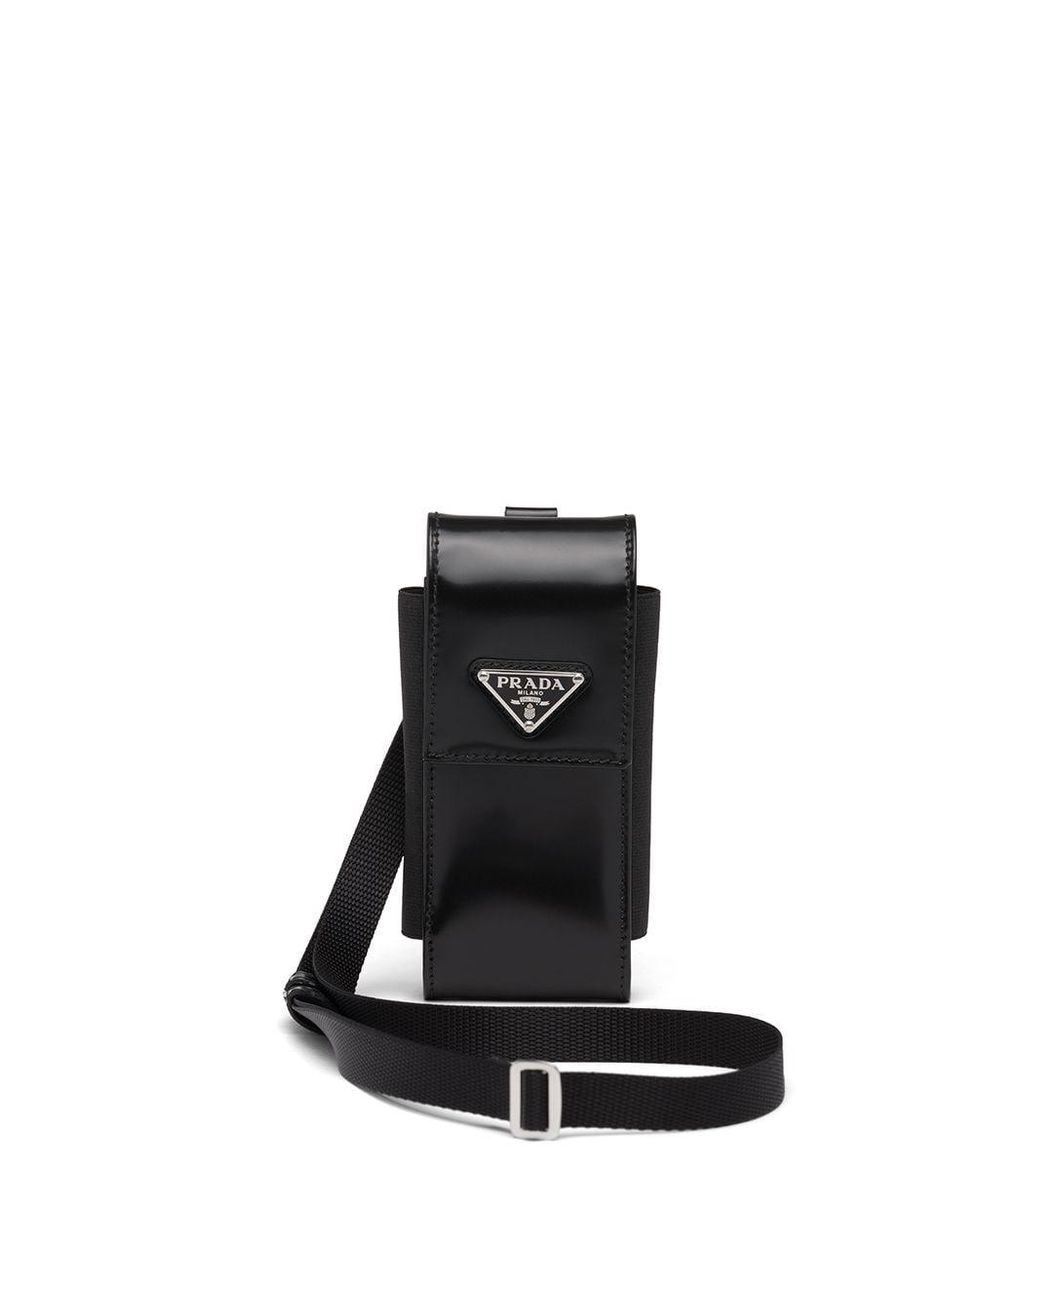 Prada Triangle-logo Leather Phone Case in Black for Men - Lyst